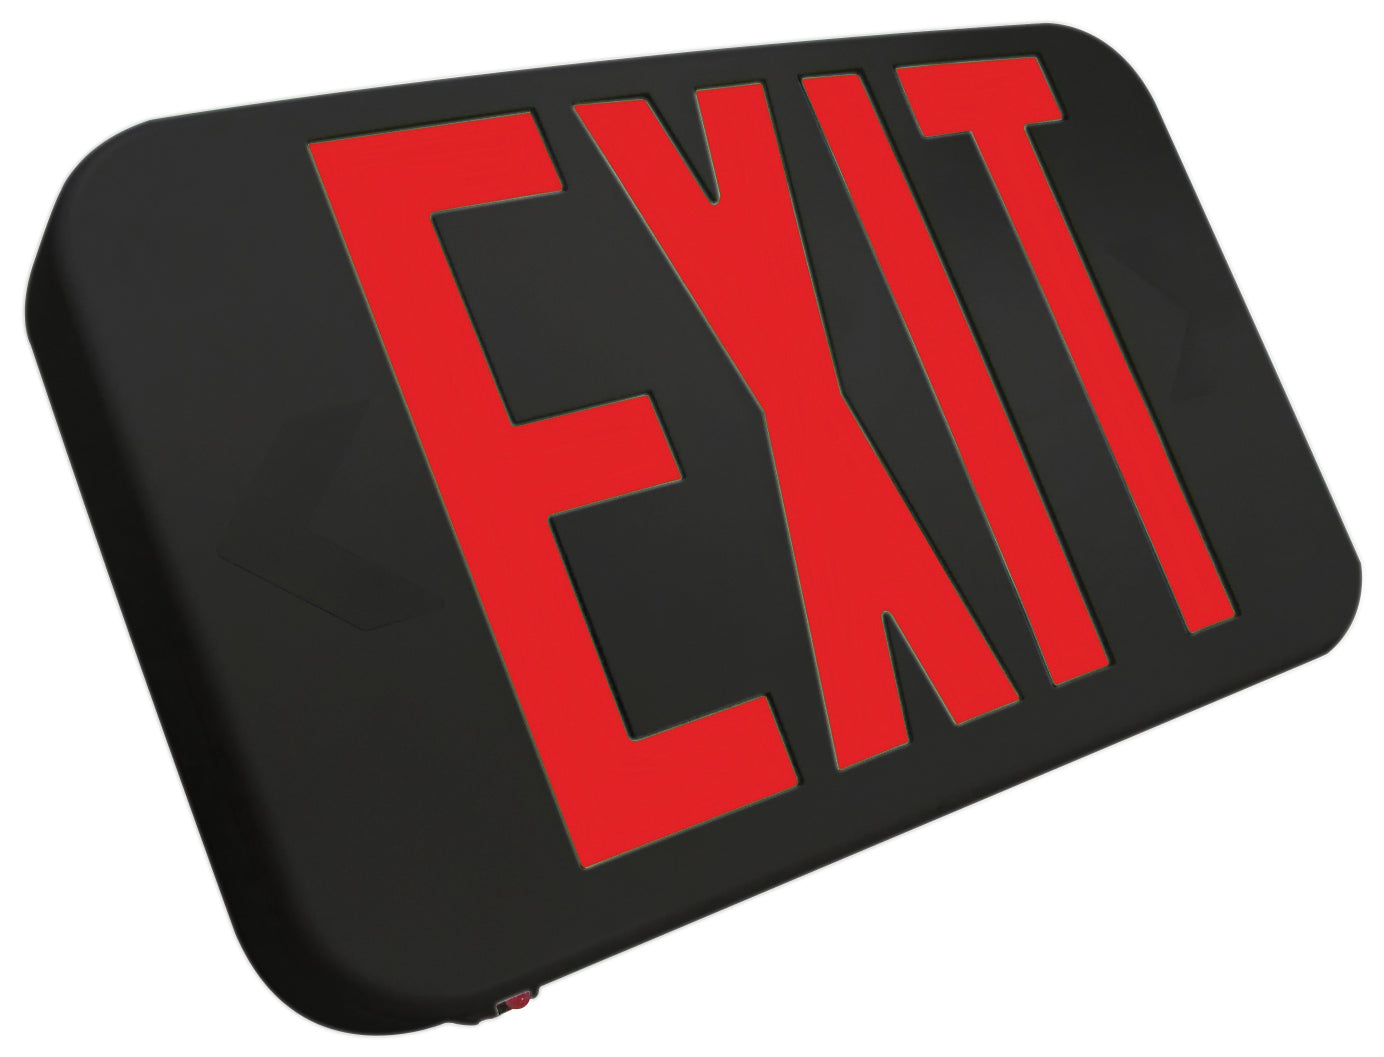 Slim Exit Sign Rounded Edges Battery Backup